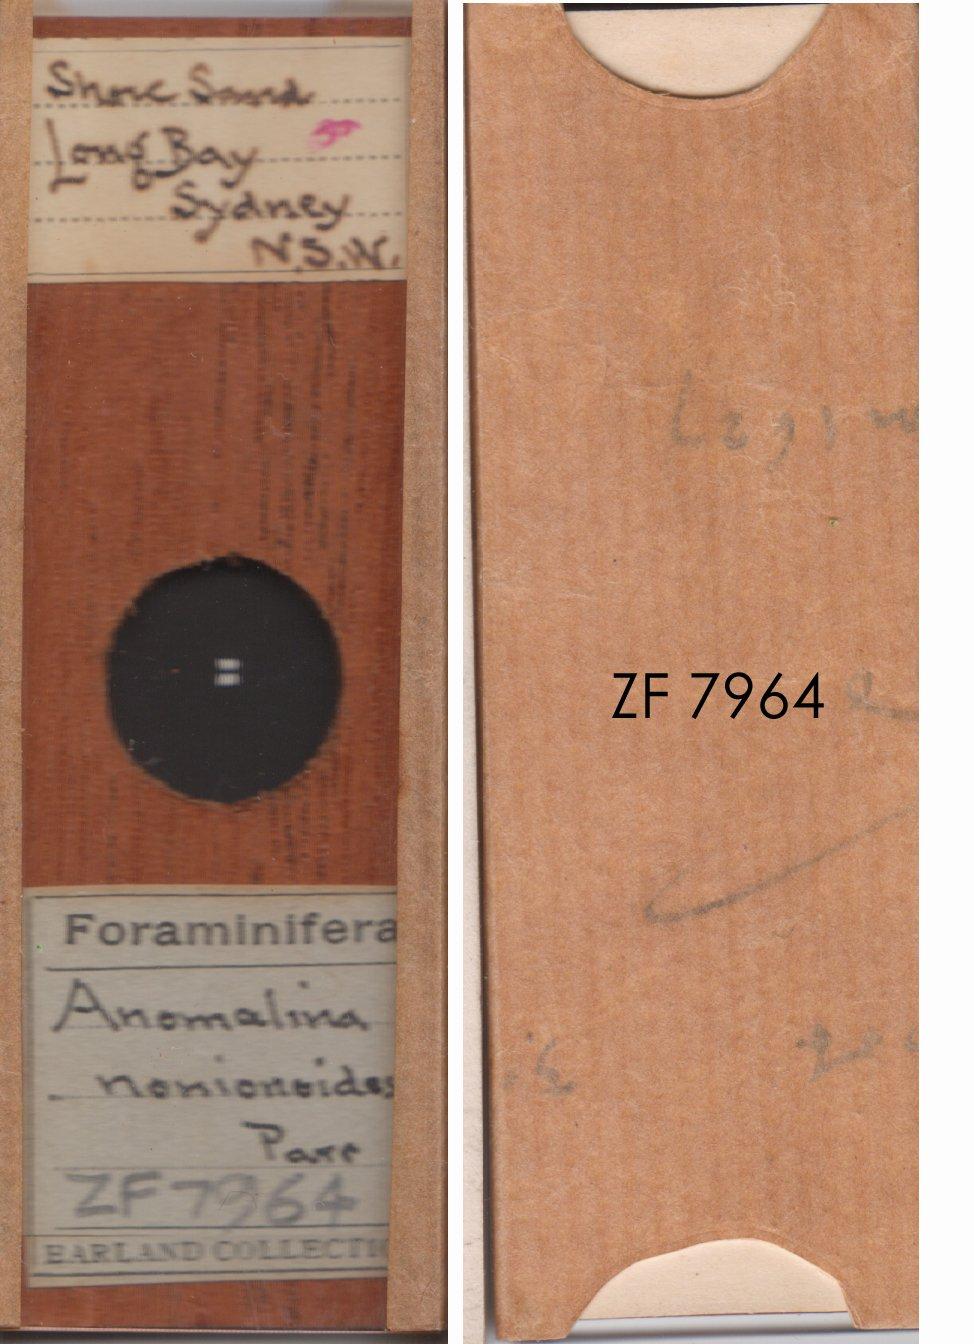 To NHMUK collection (Anomalina nonionoides Parr, 1932; NHMUK:ecatalogue:9055486)